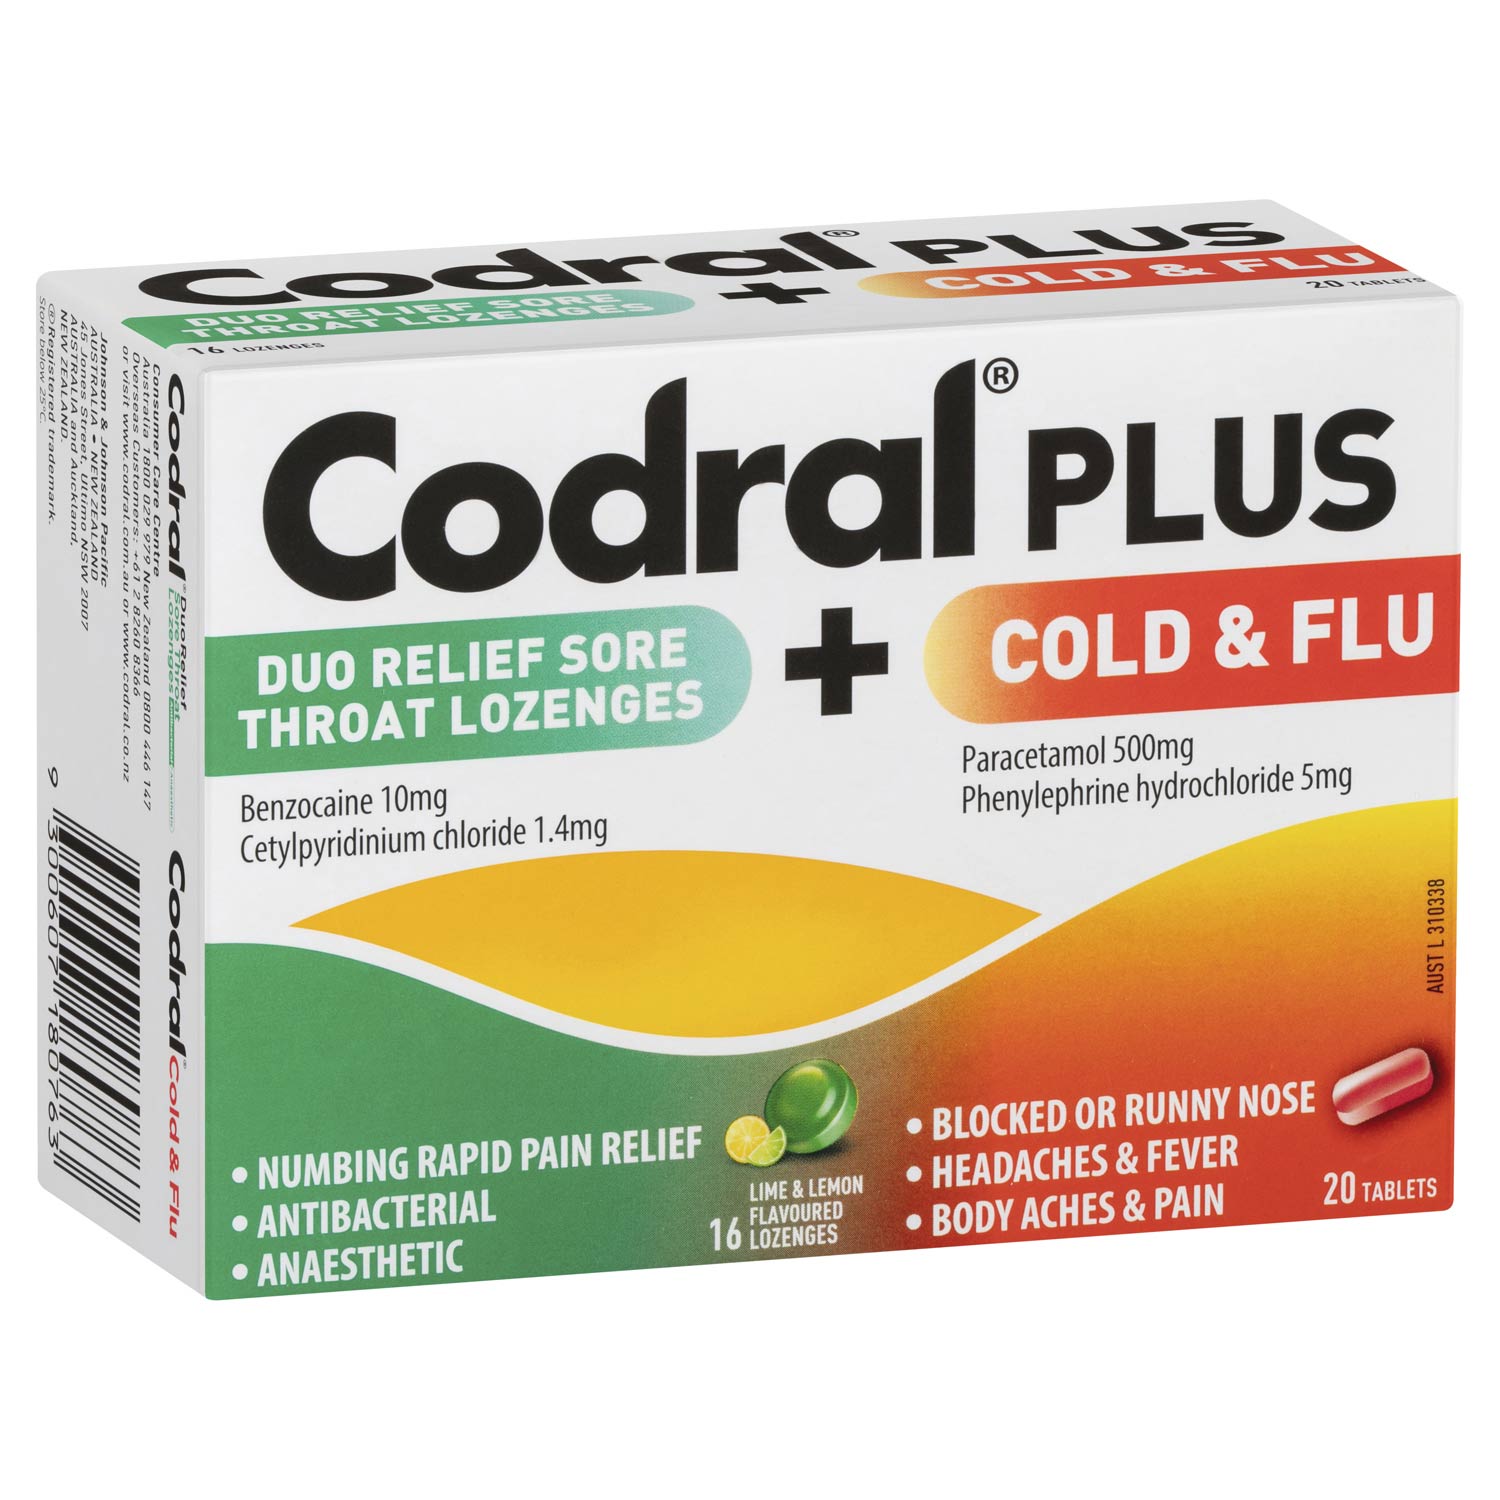 Cold/Flu Tablets. Таблетки Cold Flu. Throat Lozenge таблетки. Cold Flu Relief Индонезия.